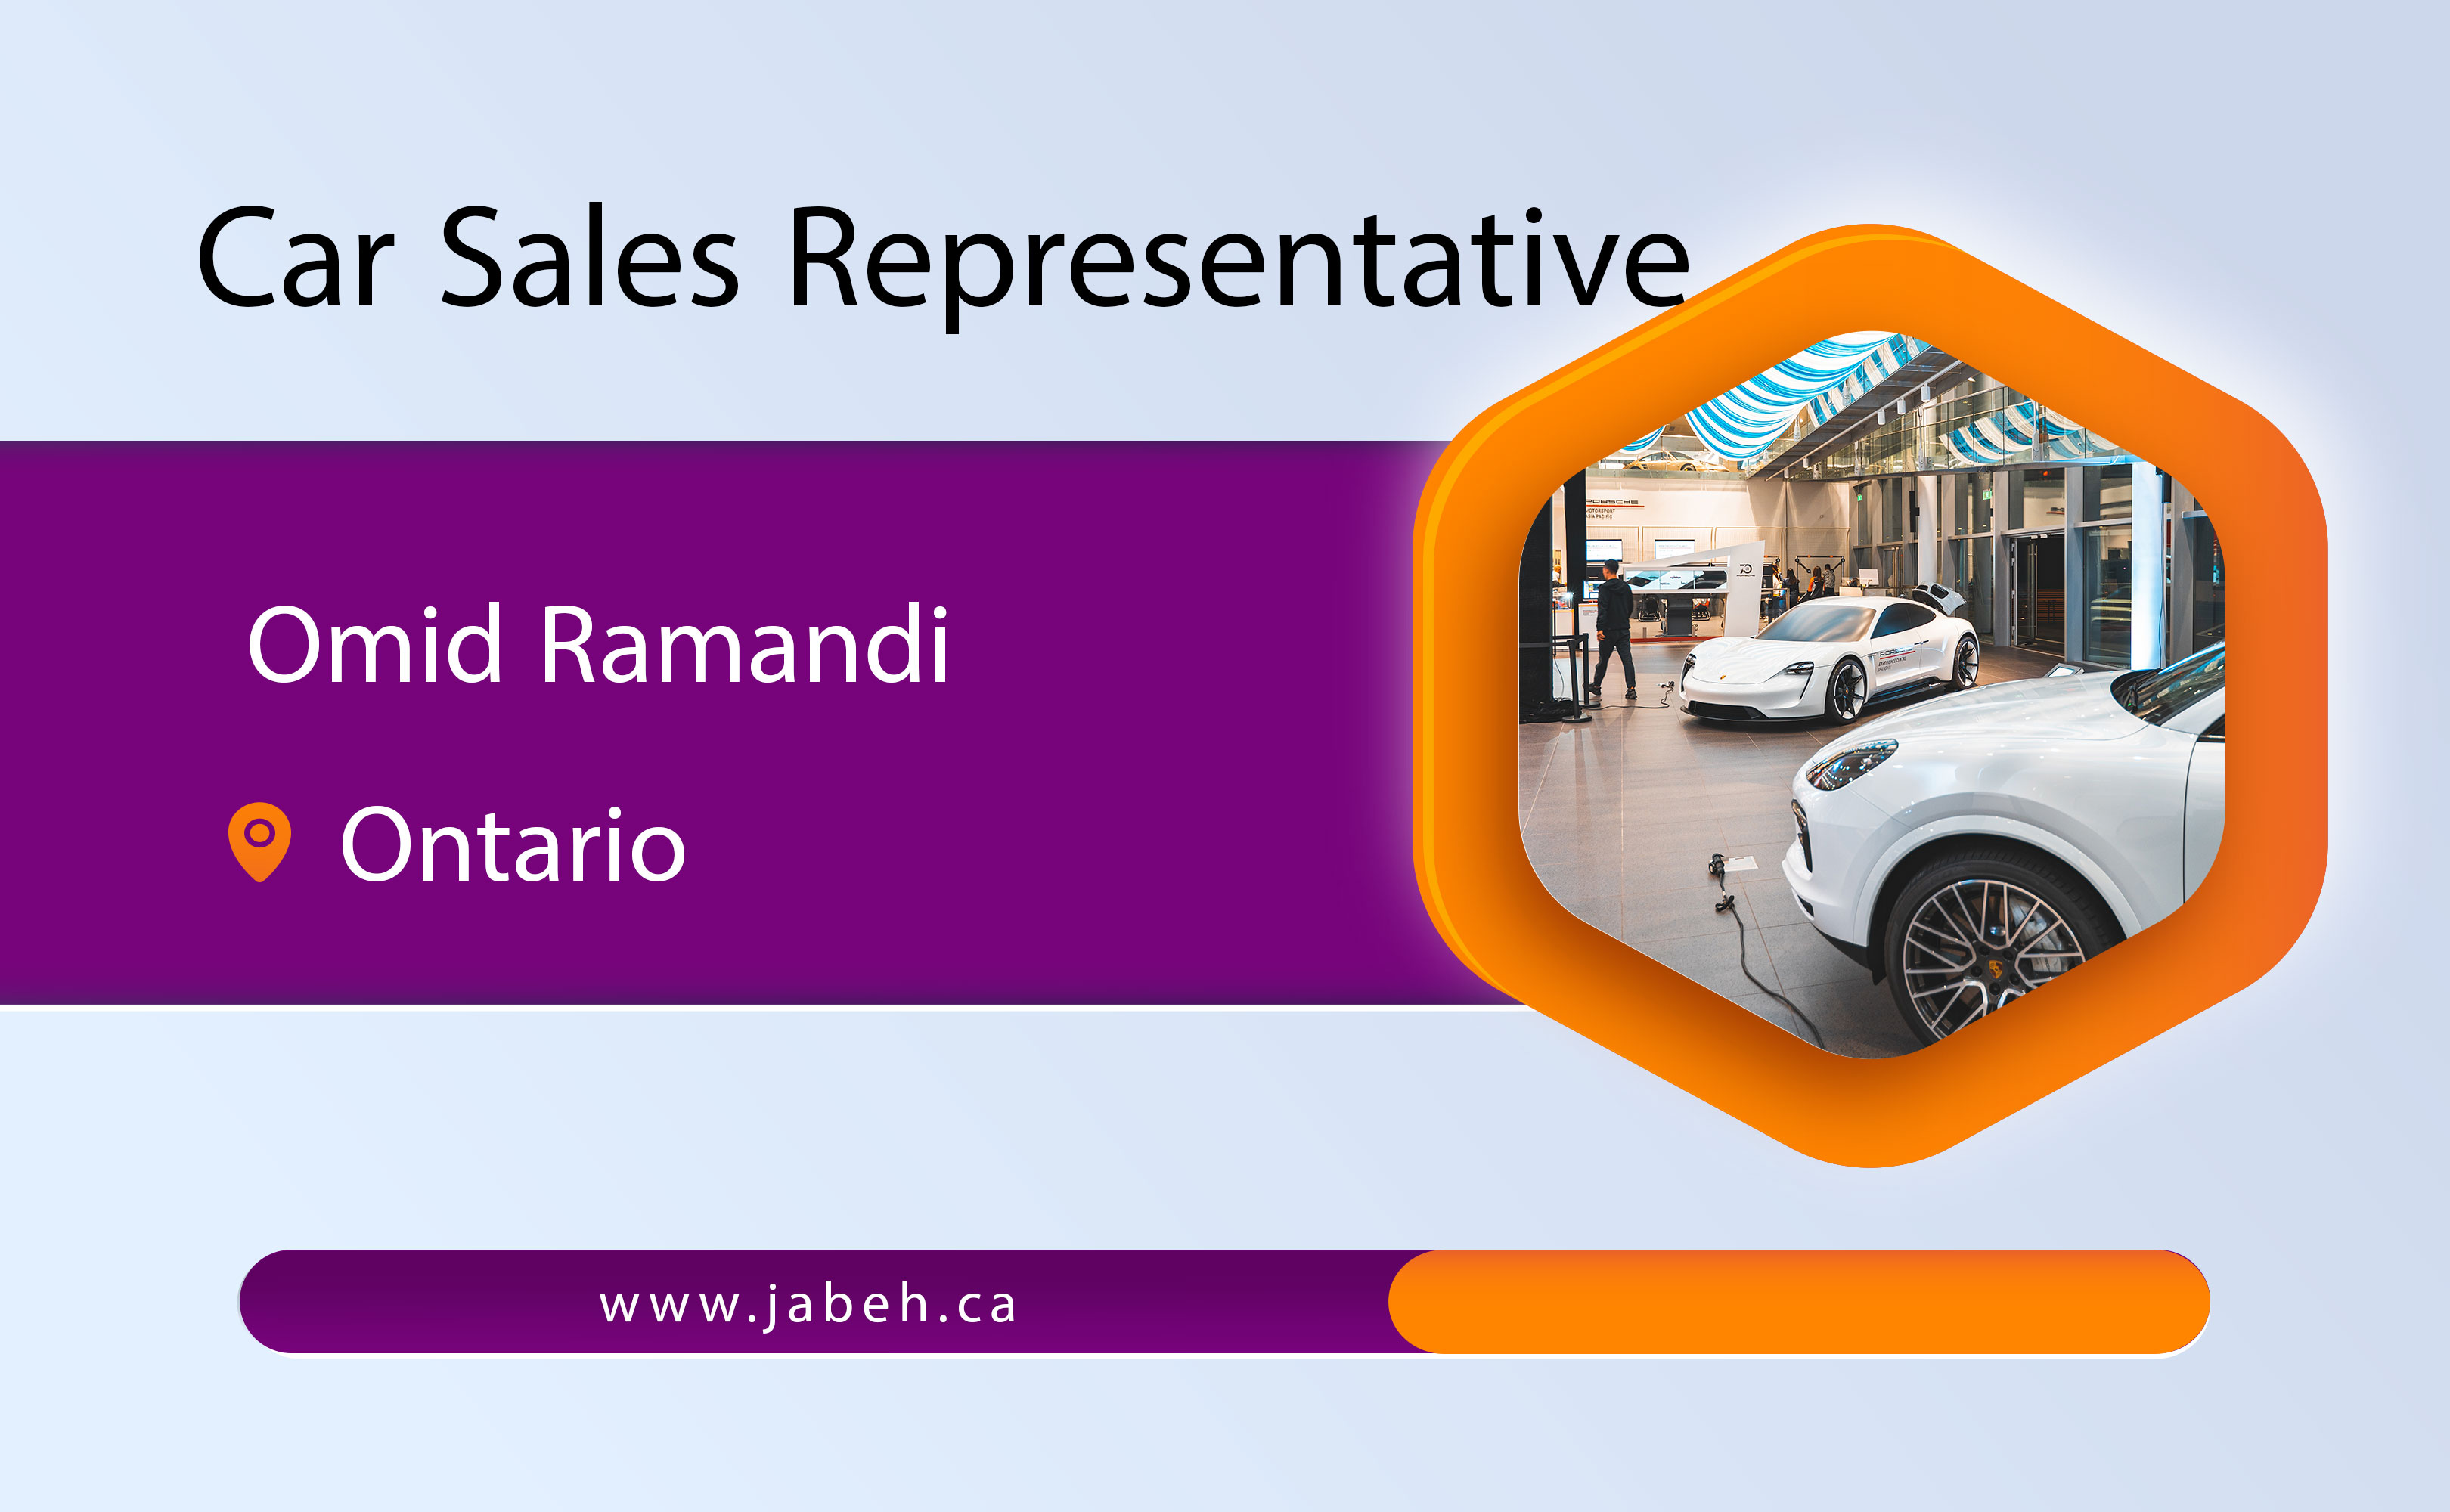 Iranian sales representative of Omid Ramandi cars in Ontario